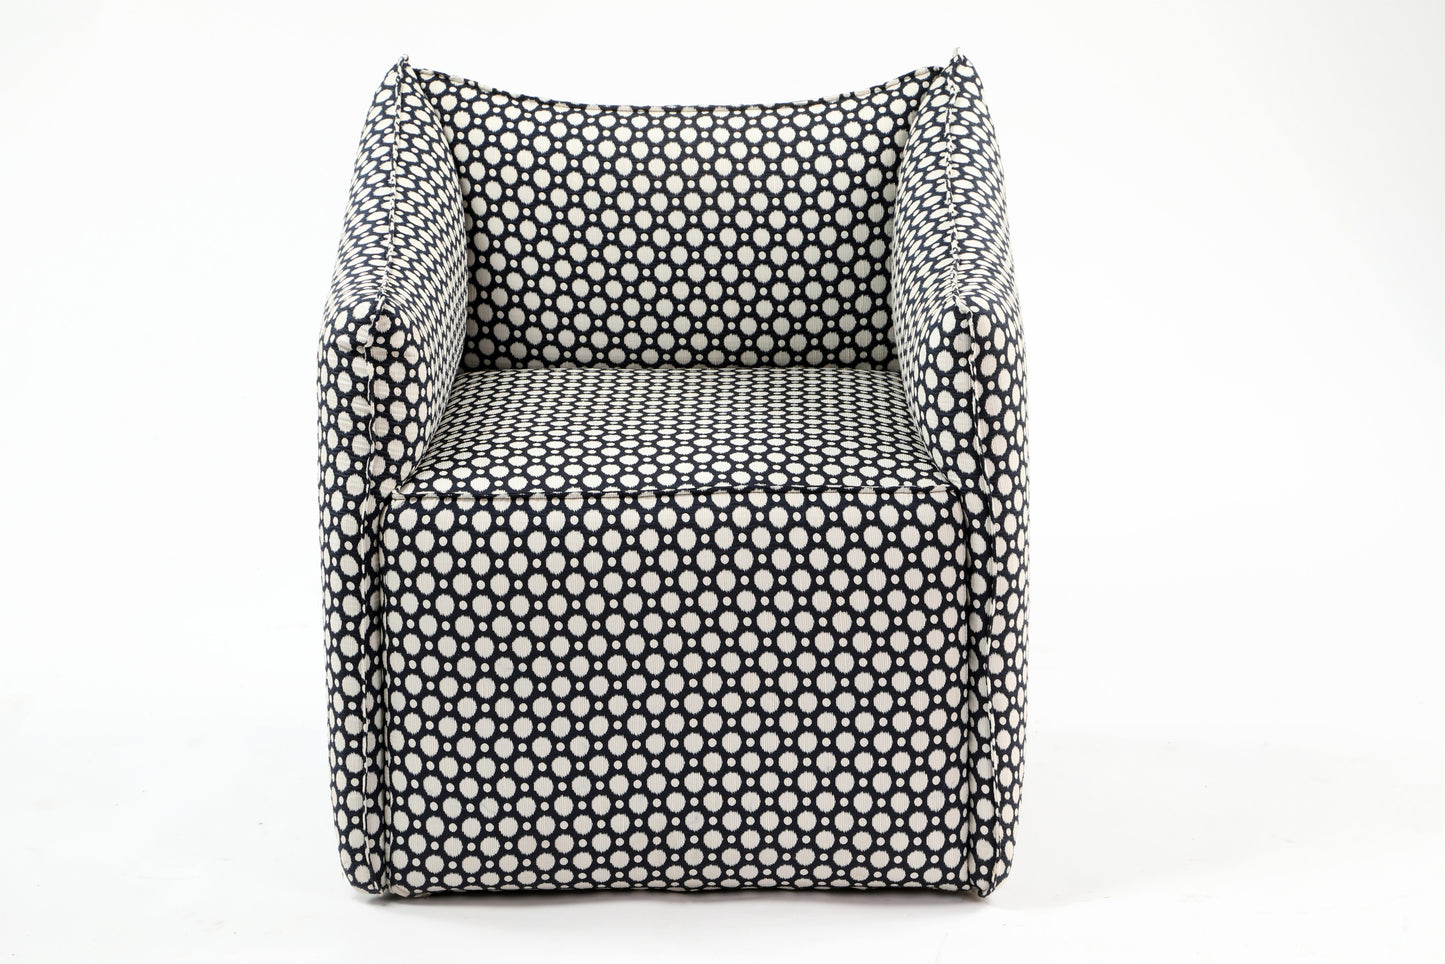 70s armchair reinterpreted with triplef polka dot silk